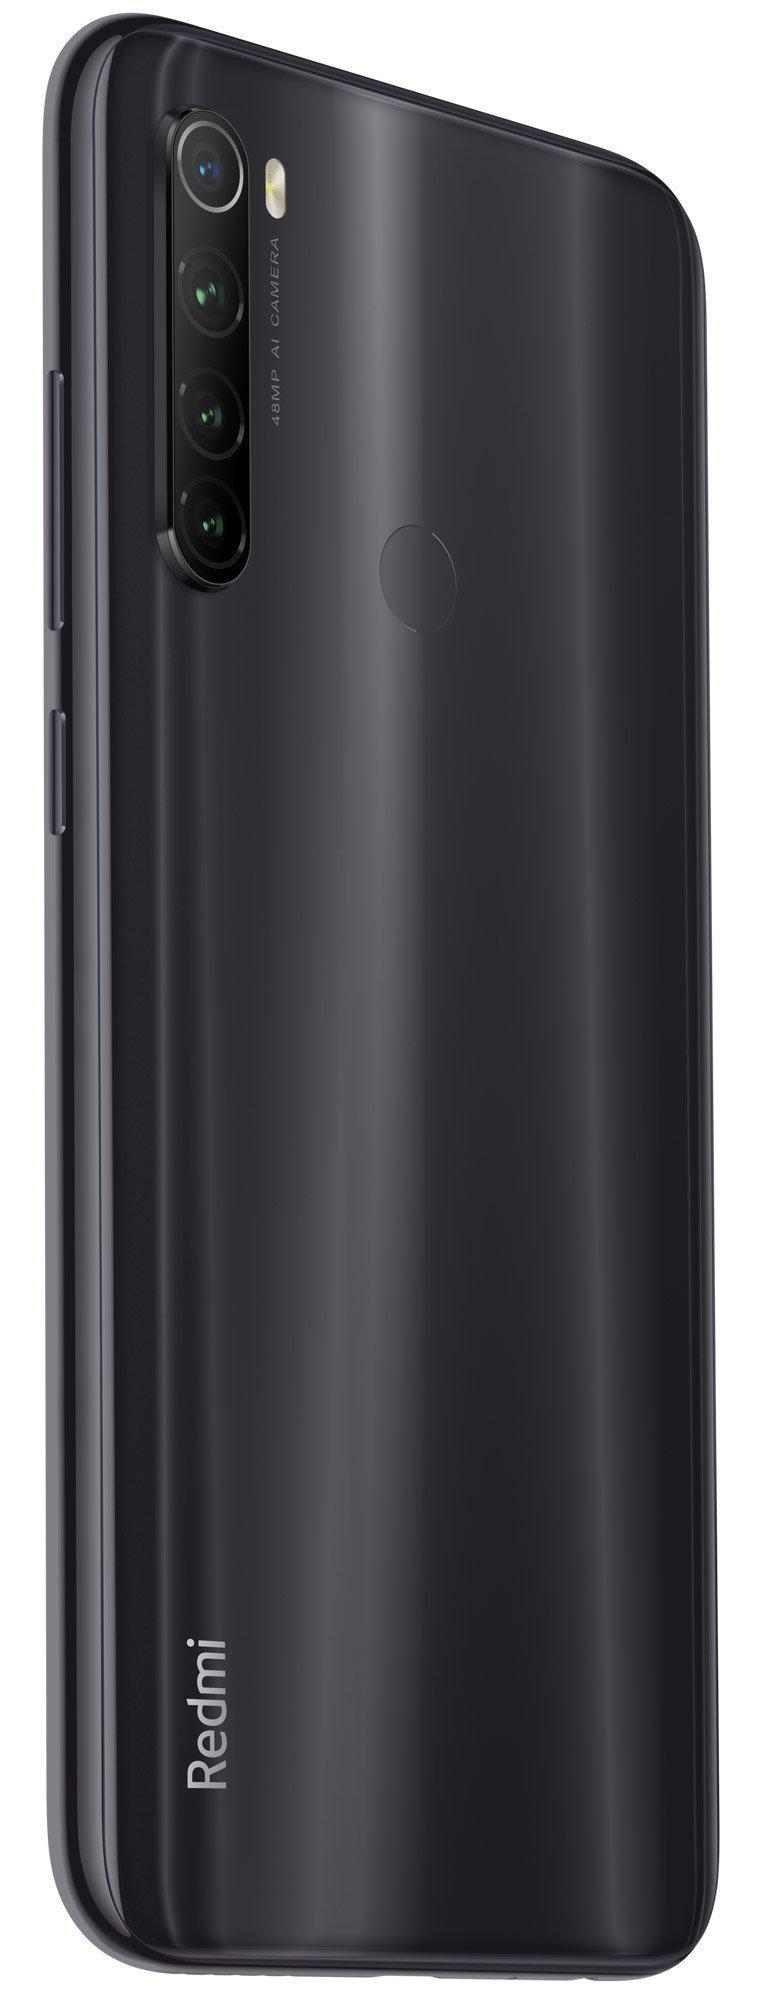 Смартфон Xiaomi Redmi Note 8T 3/32Gb Black заказать